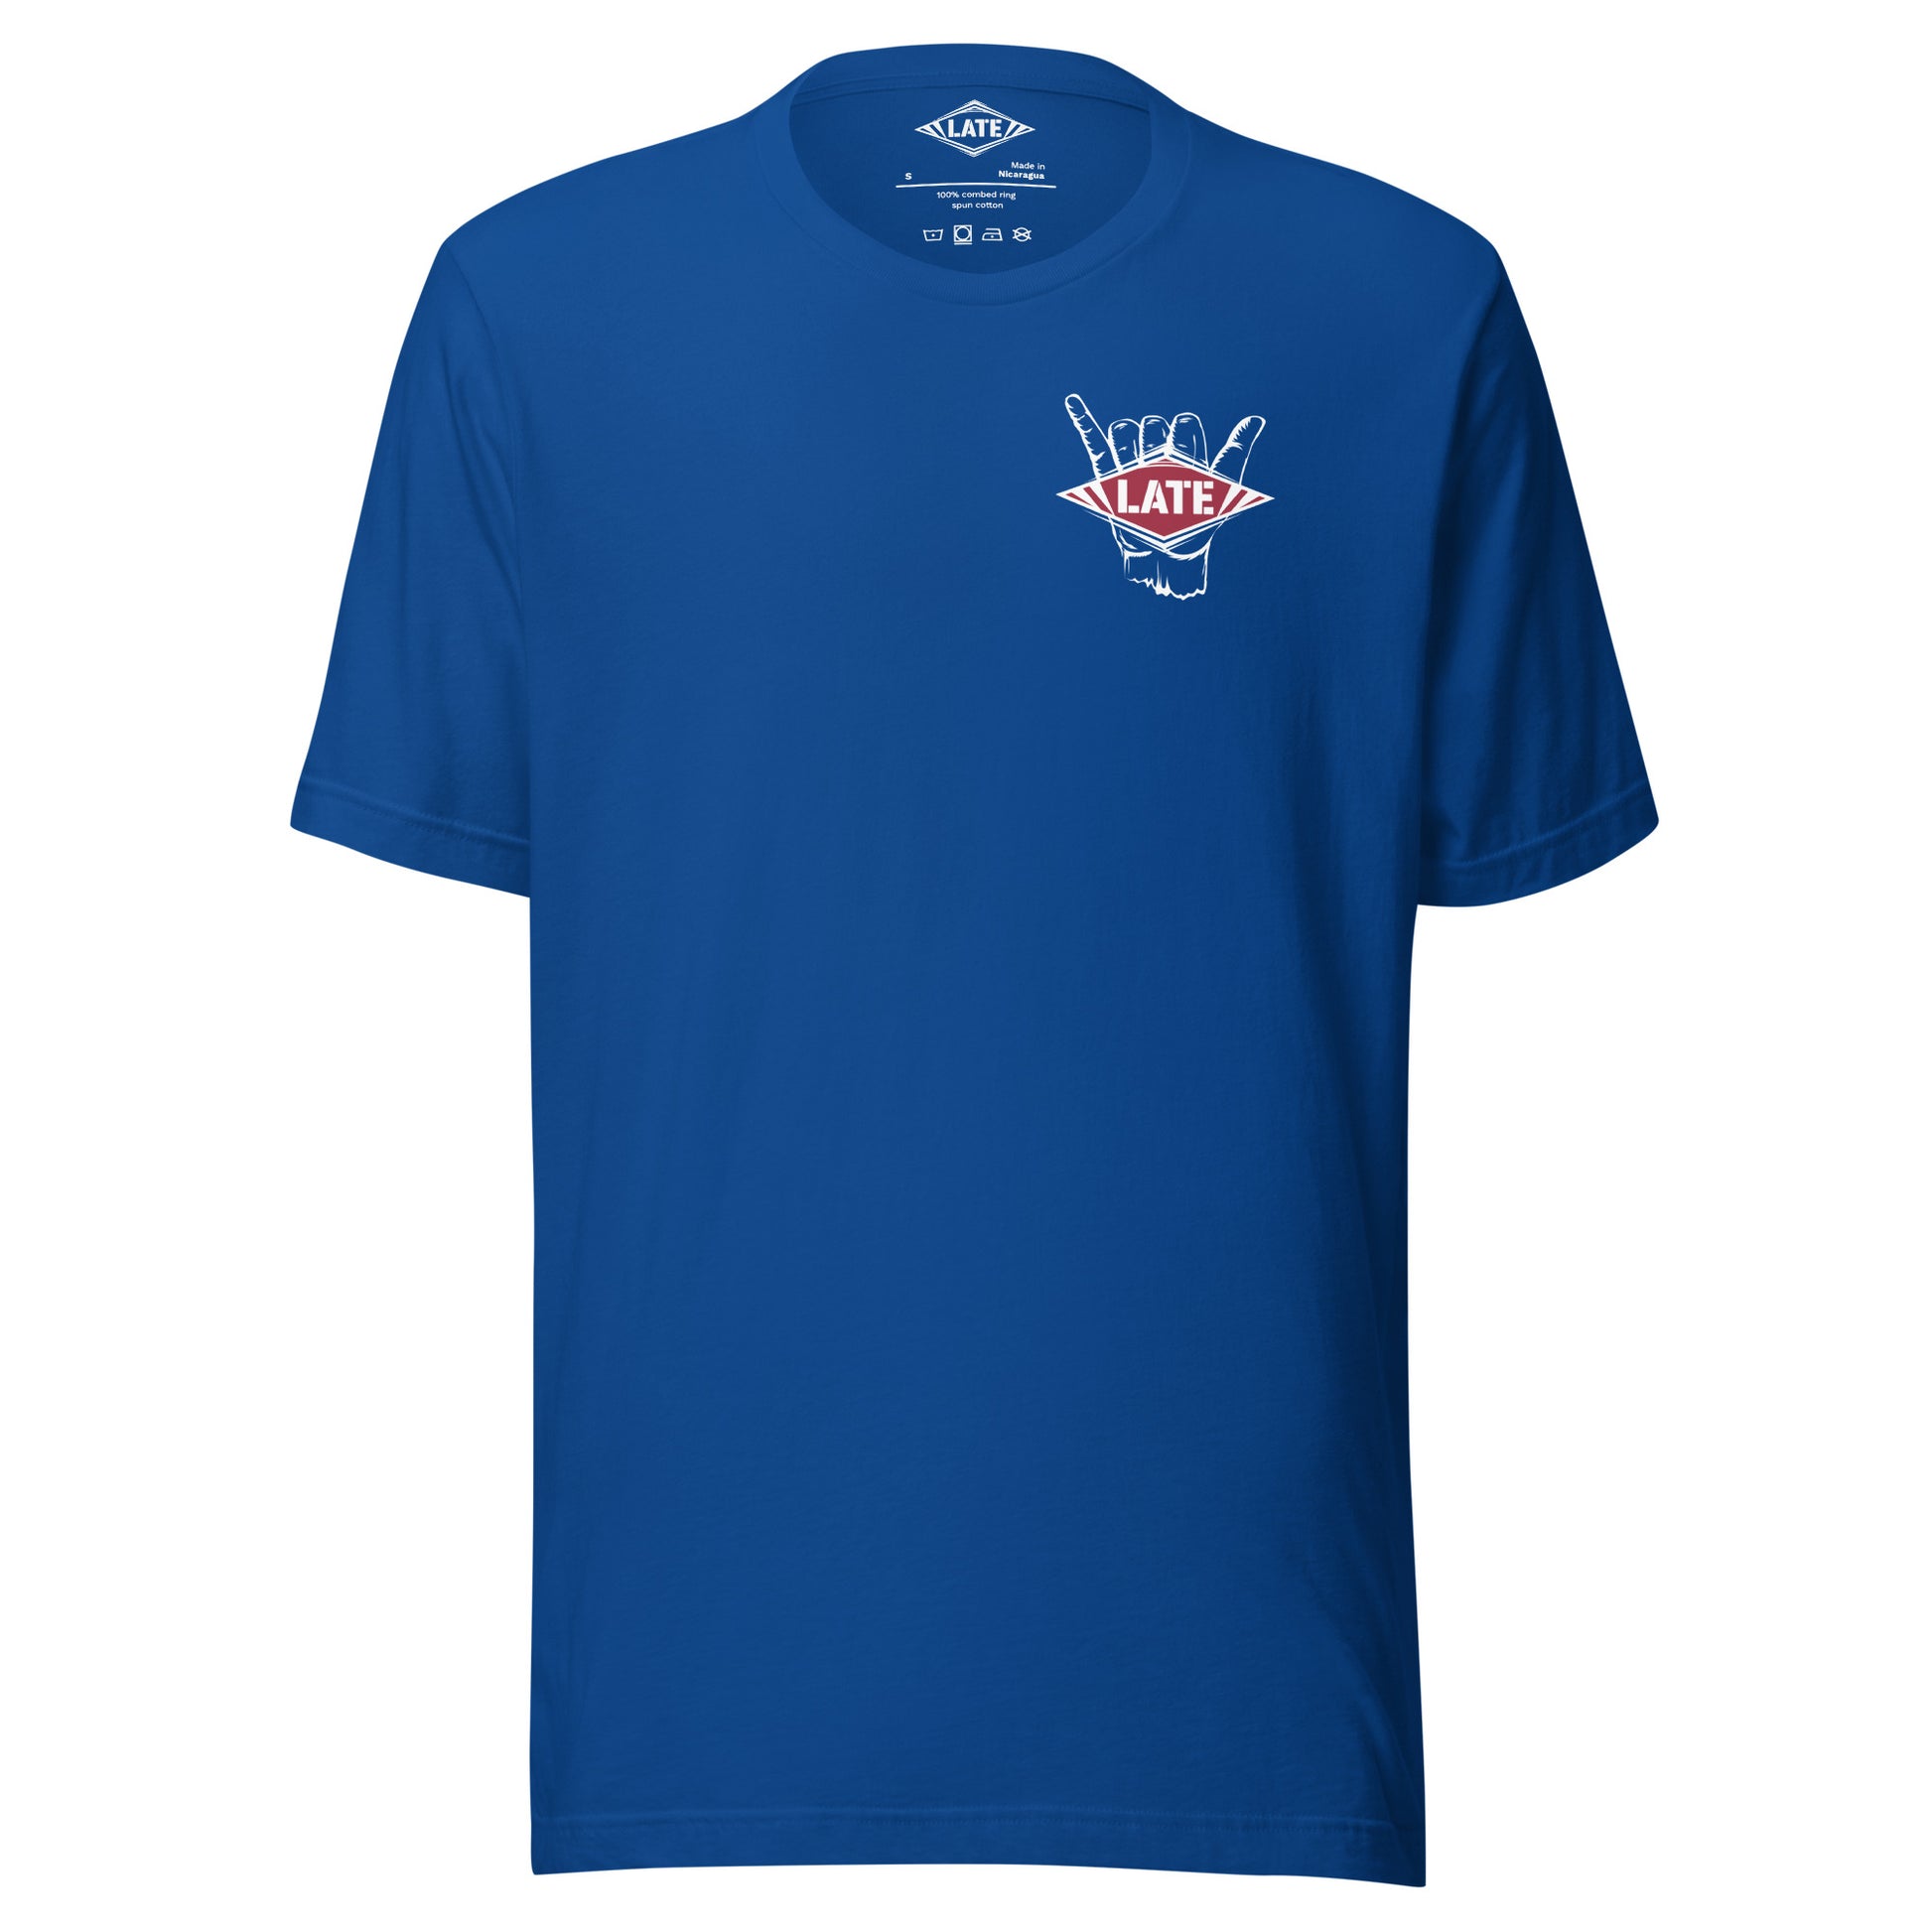 T-Shirt surfing main shaka avec le logo Late face avant t-shirt unisex couleur bleu royal